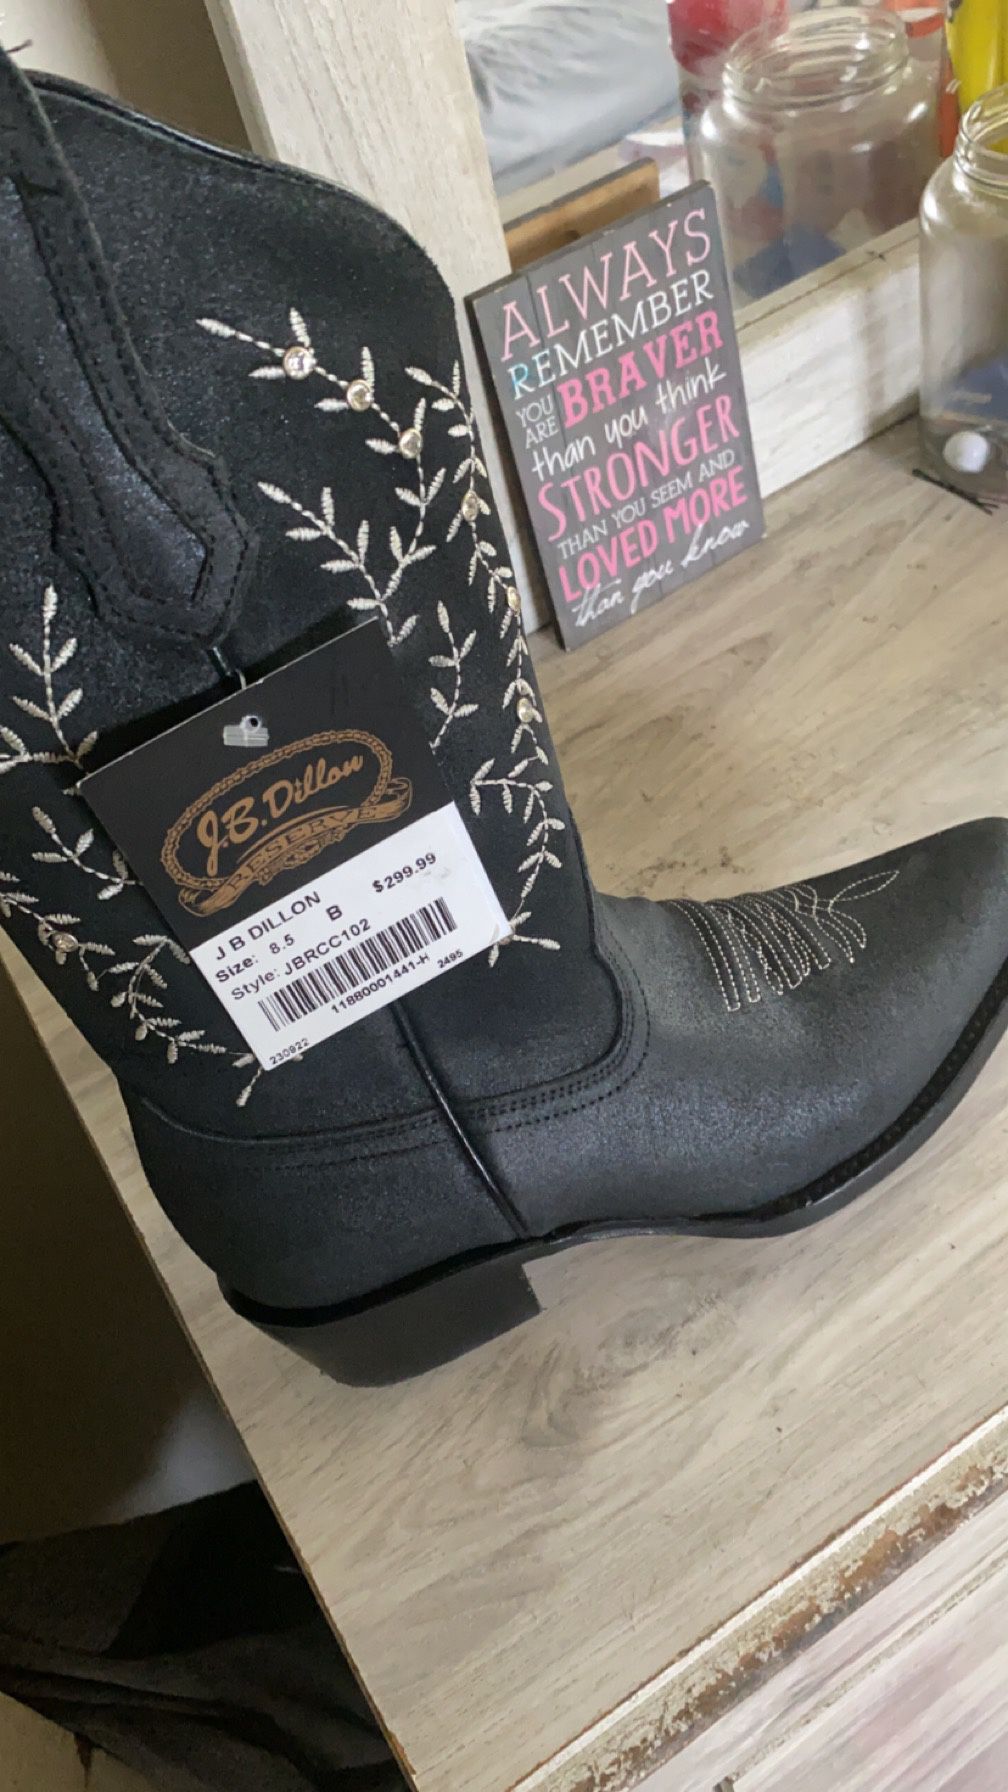 Cowboy Boots Women 8.5 Black Leather 